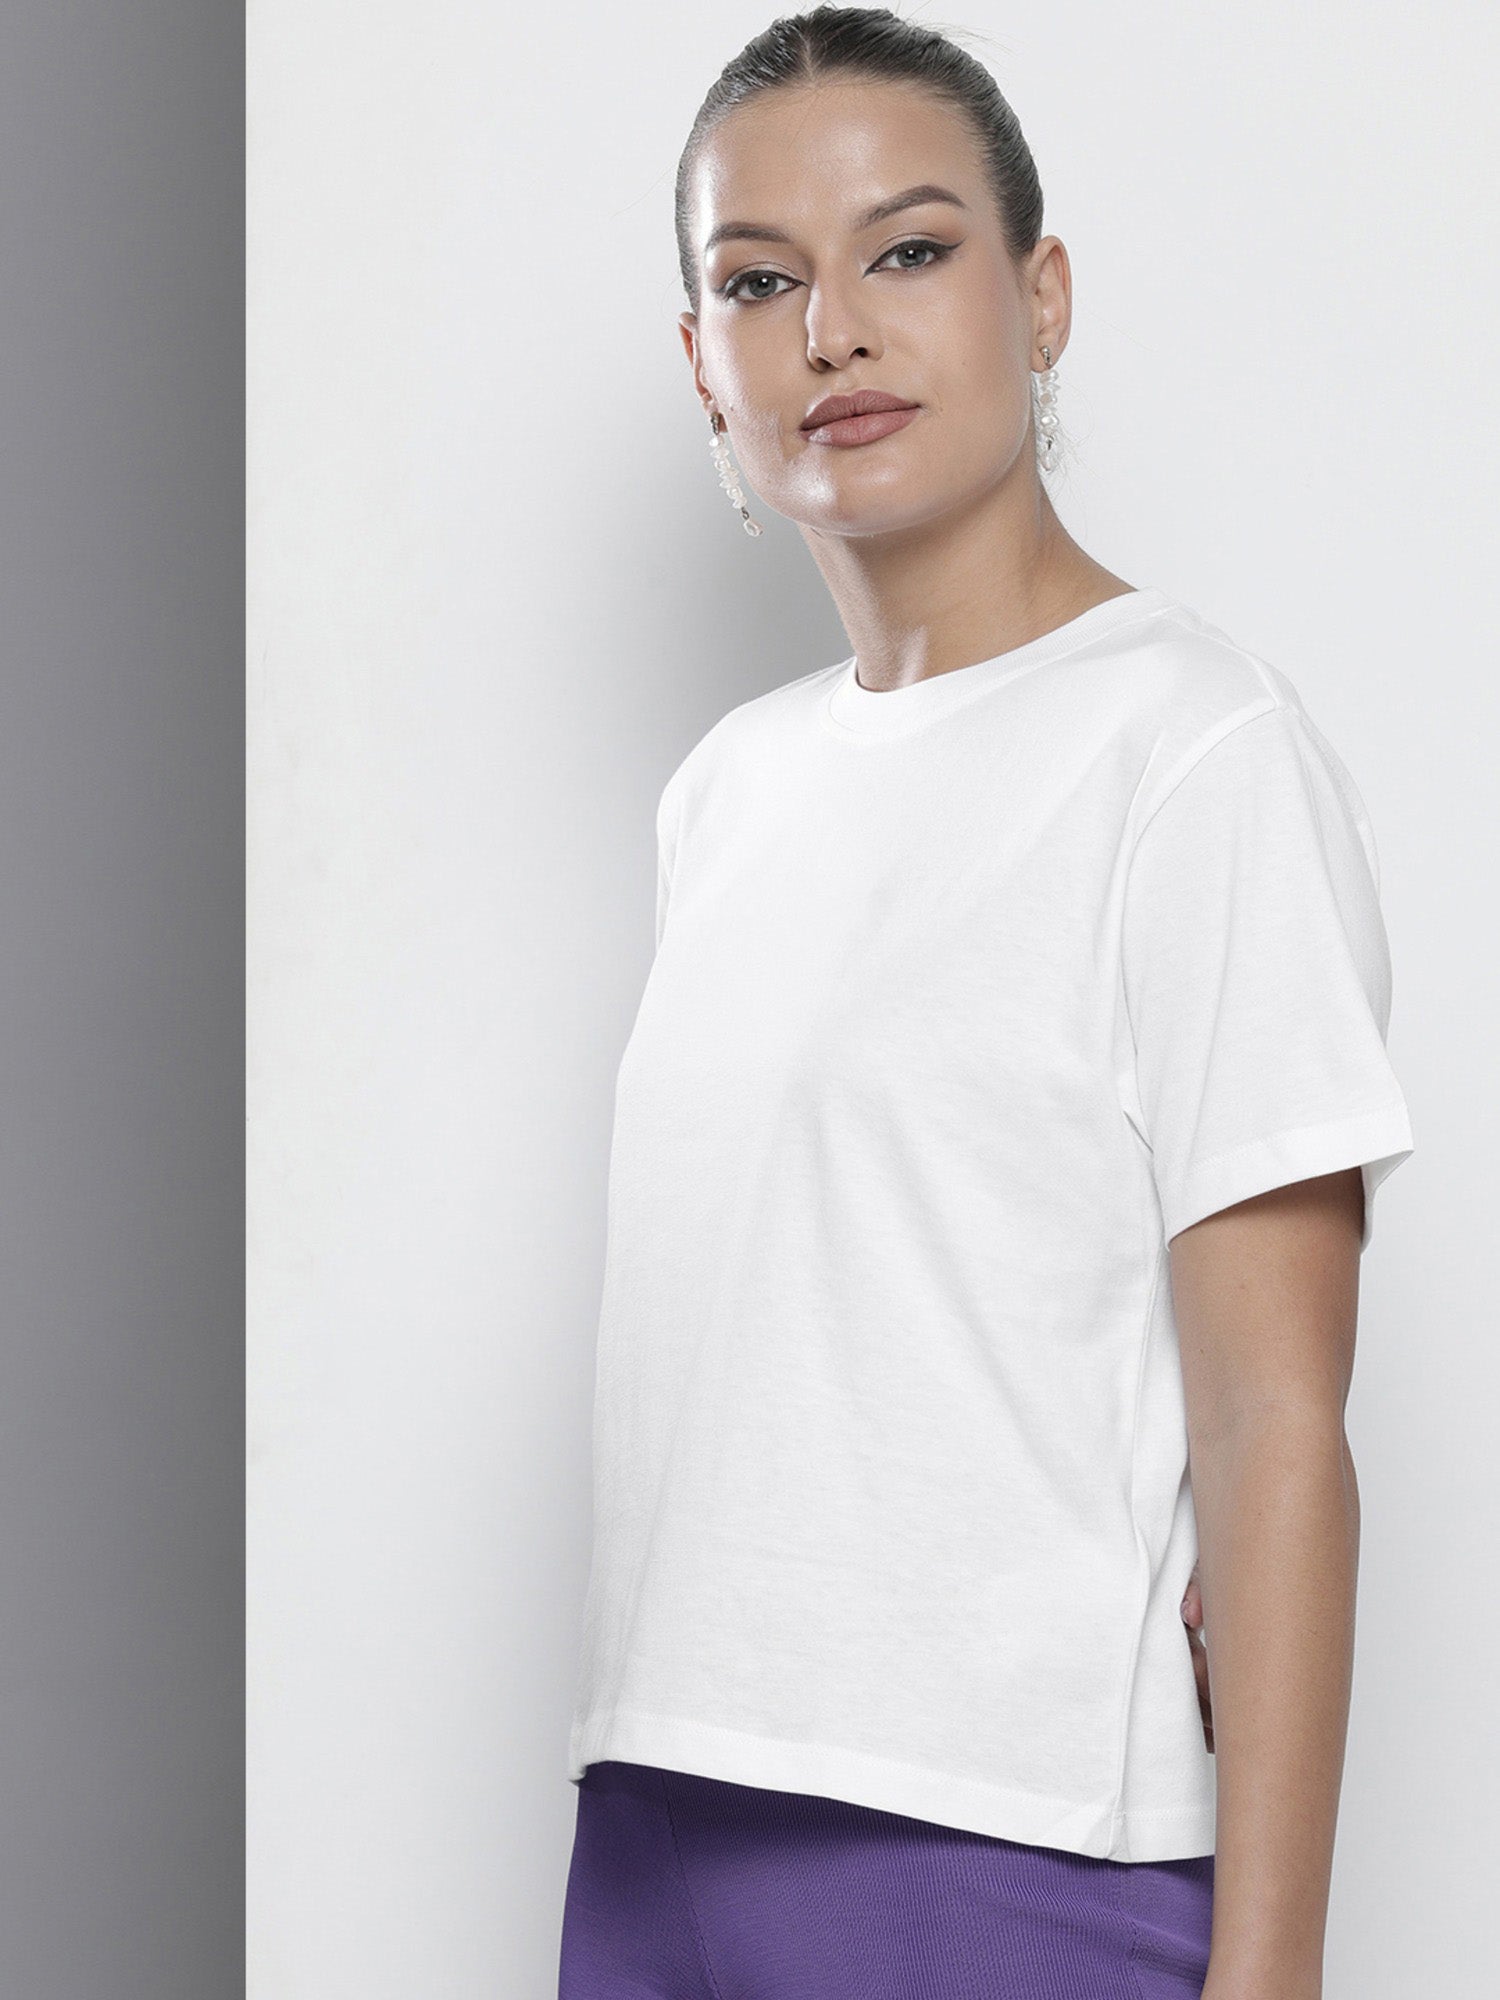 Summer Tee Shirt For Ladies-White-RT745